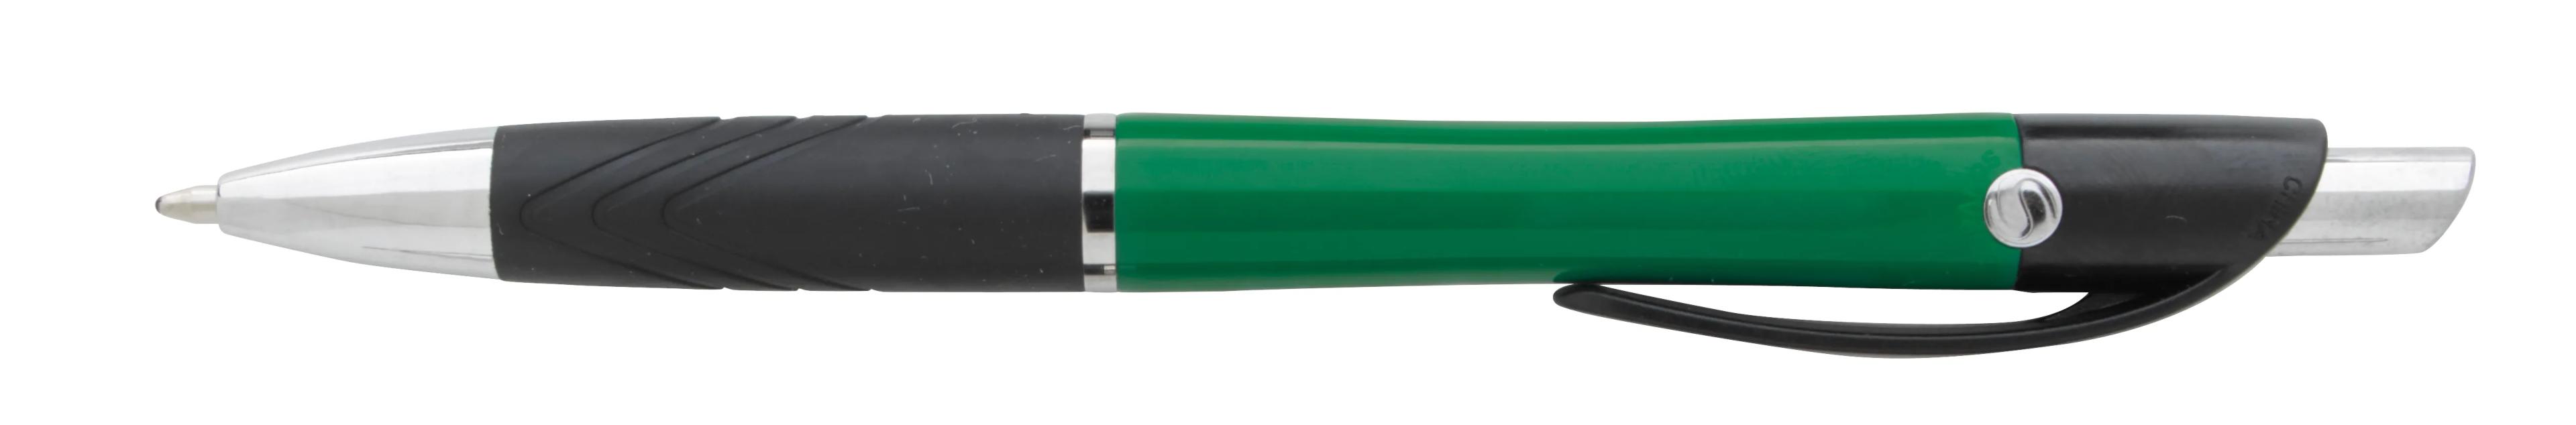 Souvenir® Emblem Color Pen 11 of 28